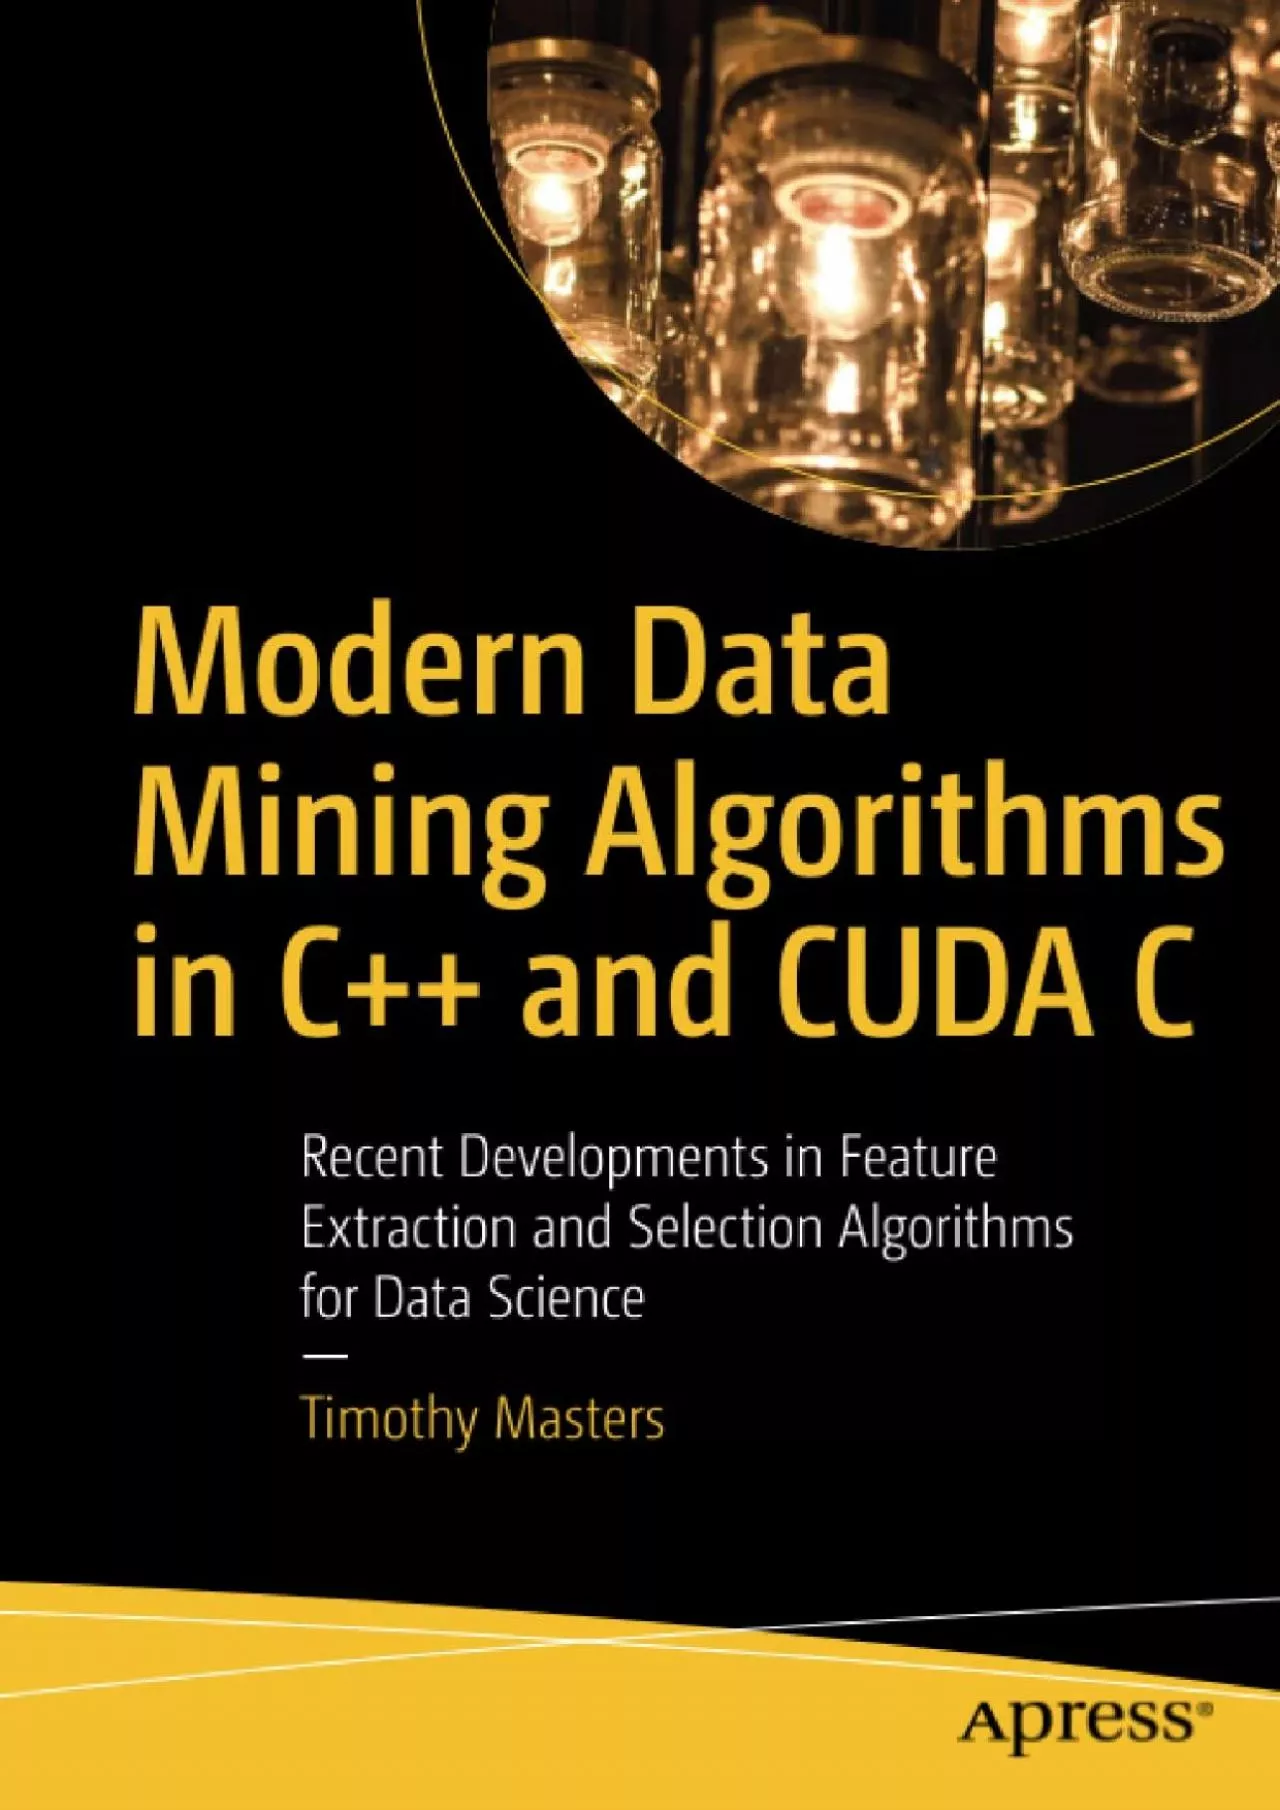 [BEST]-Modern Data Mining Algorithms in C++ and CUDA C: Recent Developments in Feature